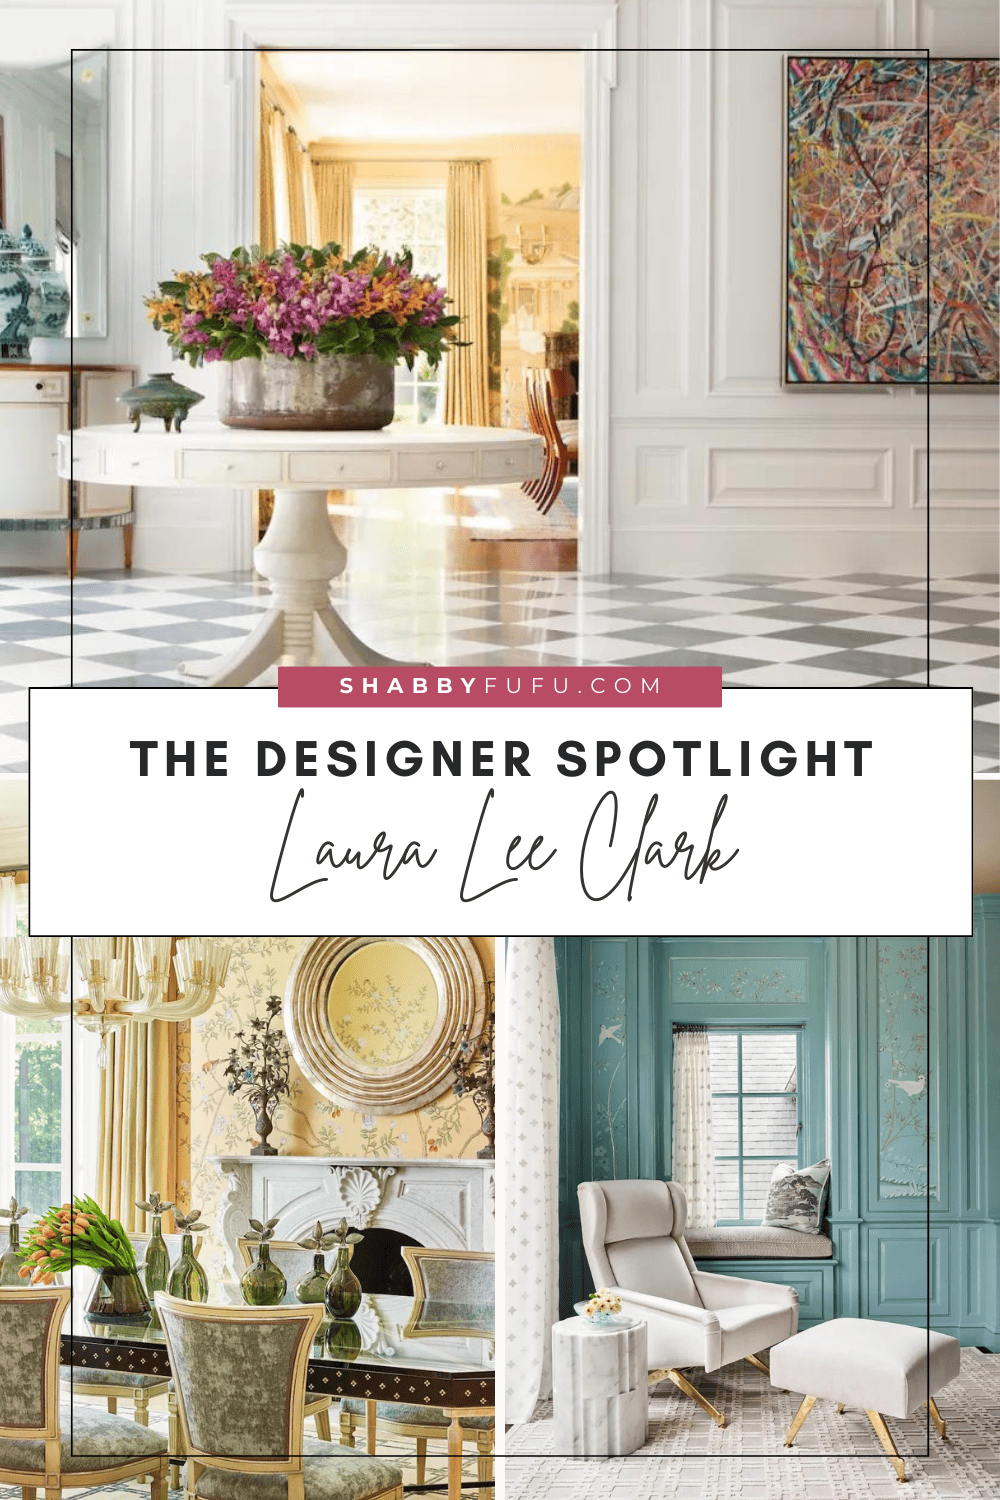 Pinterest decorative collage image titled "Designer Spotlight - Laura Lee Clark"